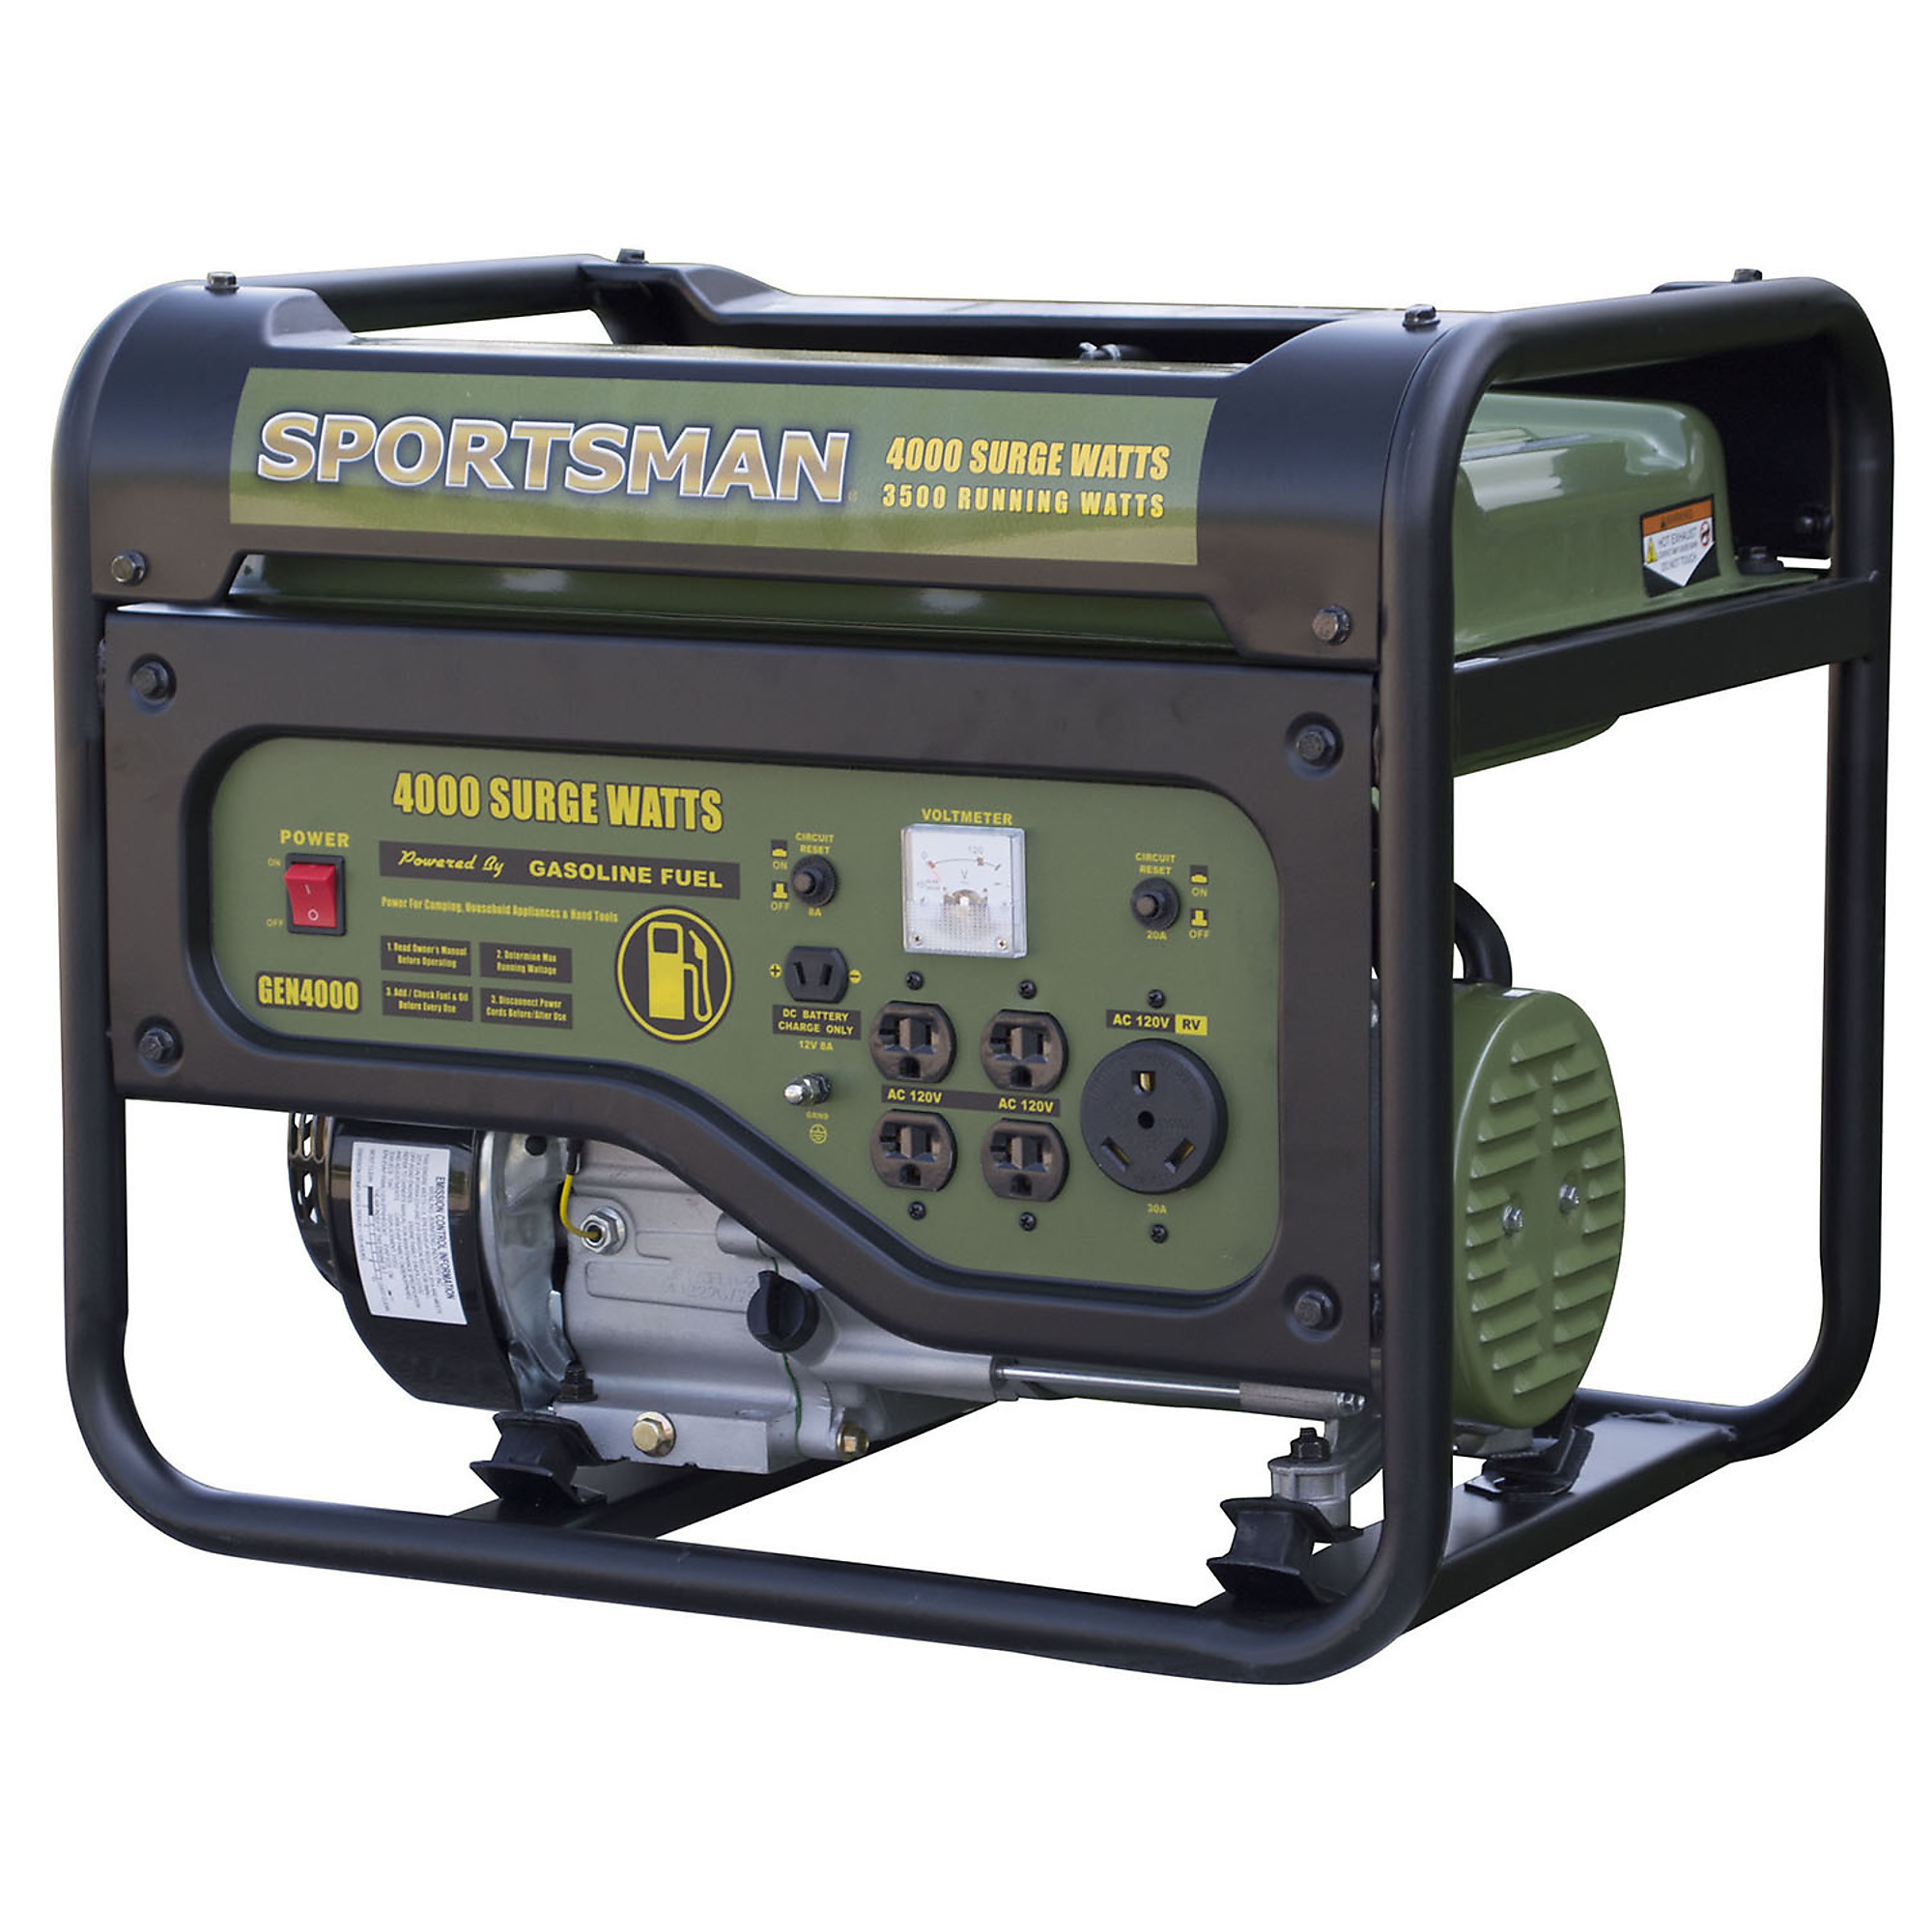 Sportsman, Gasoline 4000 Watt Portable Generator, Surge Watts 4000 Voltage 120 Model GEN4000